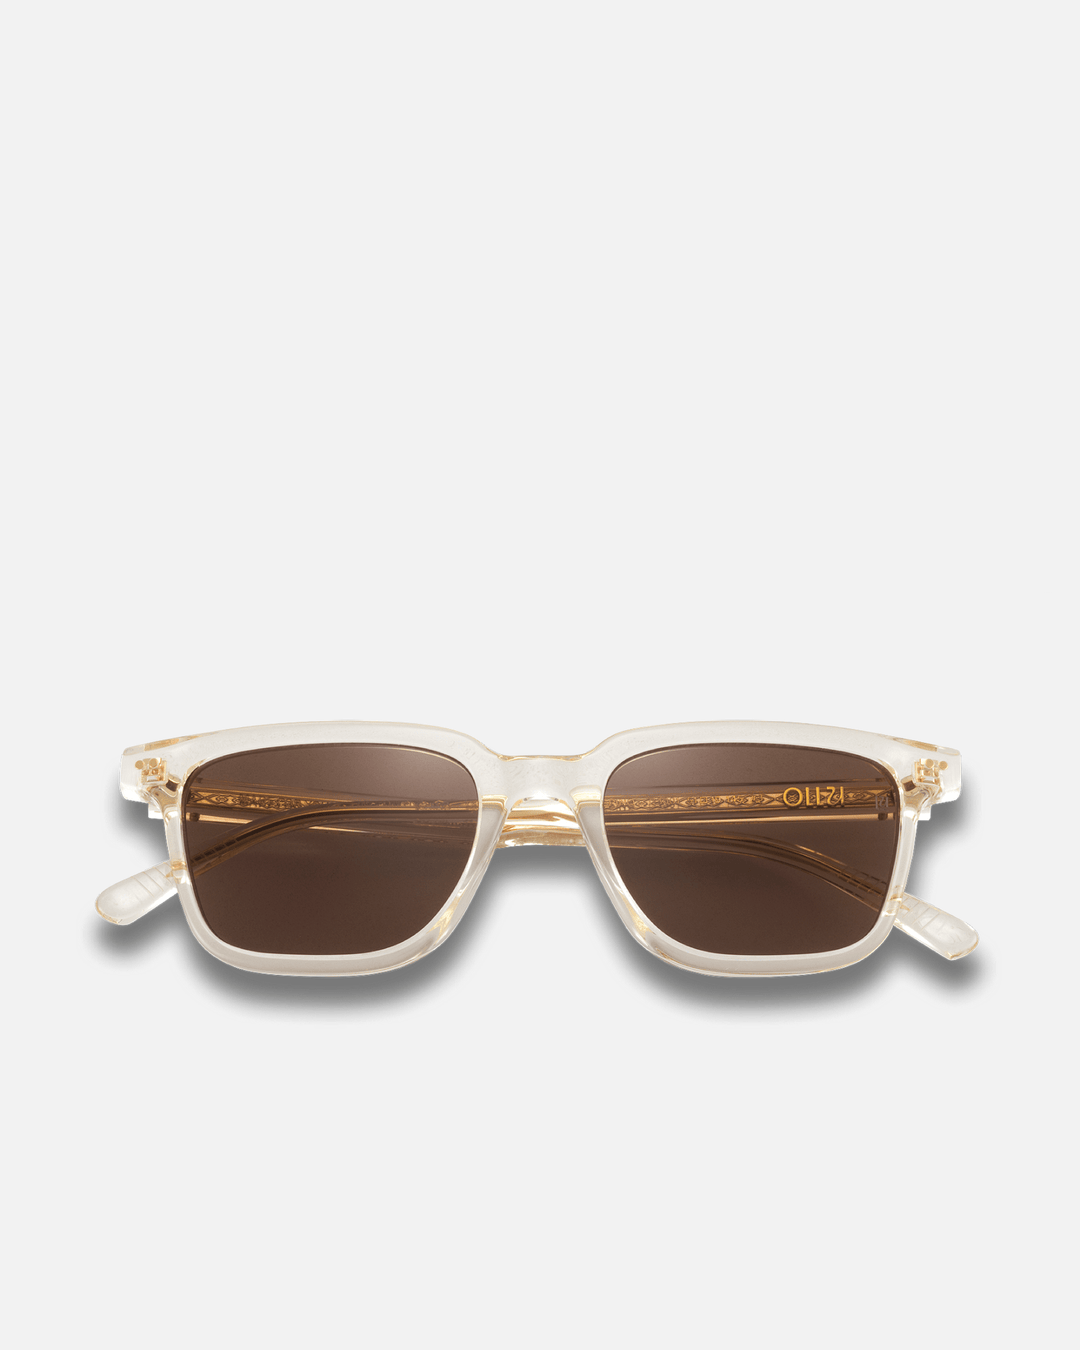 PEPINO Bio-Acetate Square Frame Sunglasses for Men & Women | Champagne | Sunnies Collection | OLLU